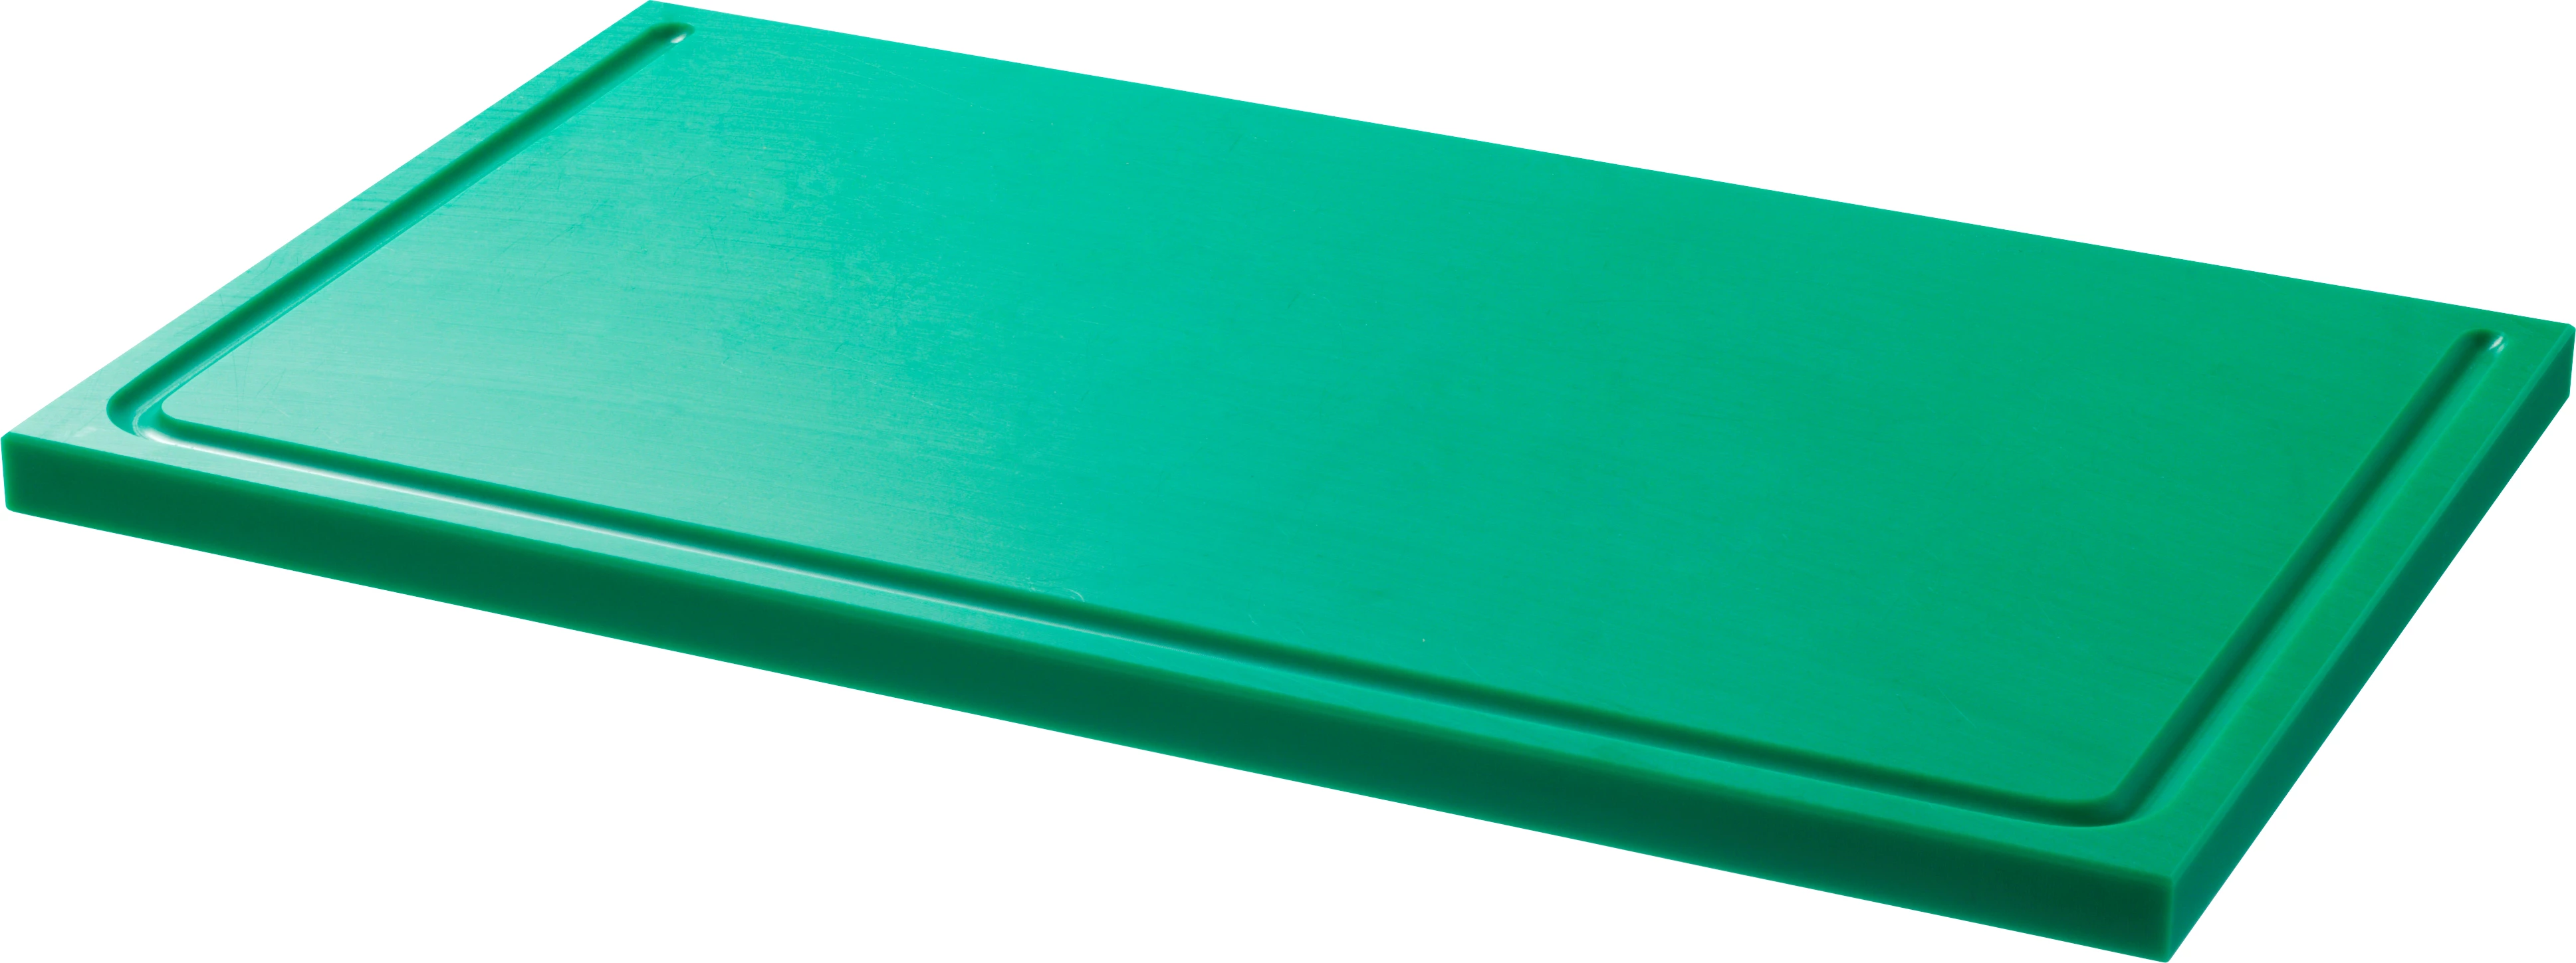 Euroboard skæreplanke, grøn, 50 x 30 x 2 cm